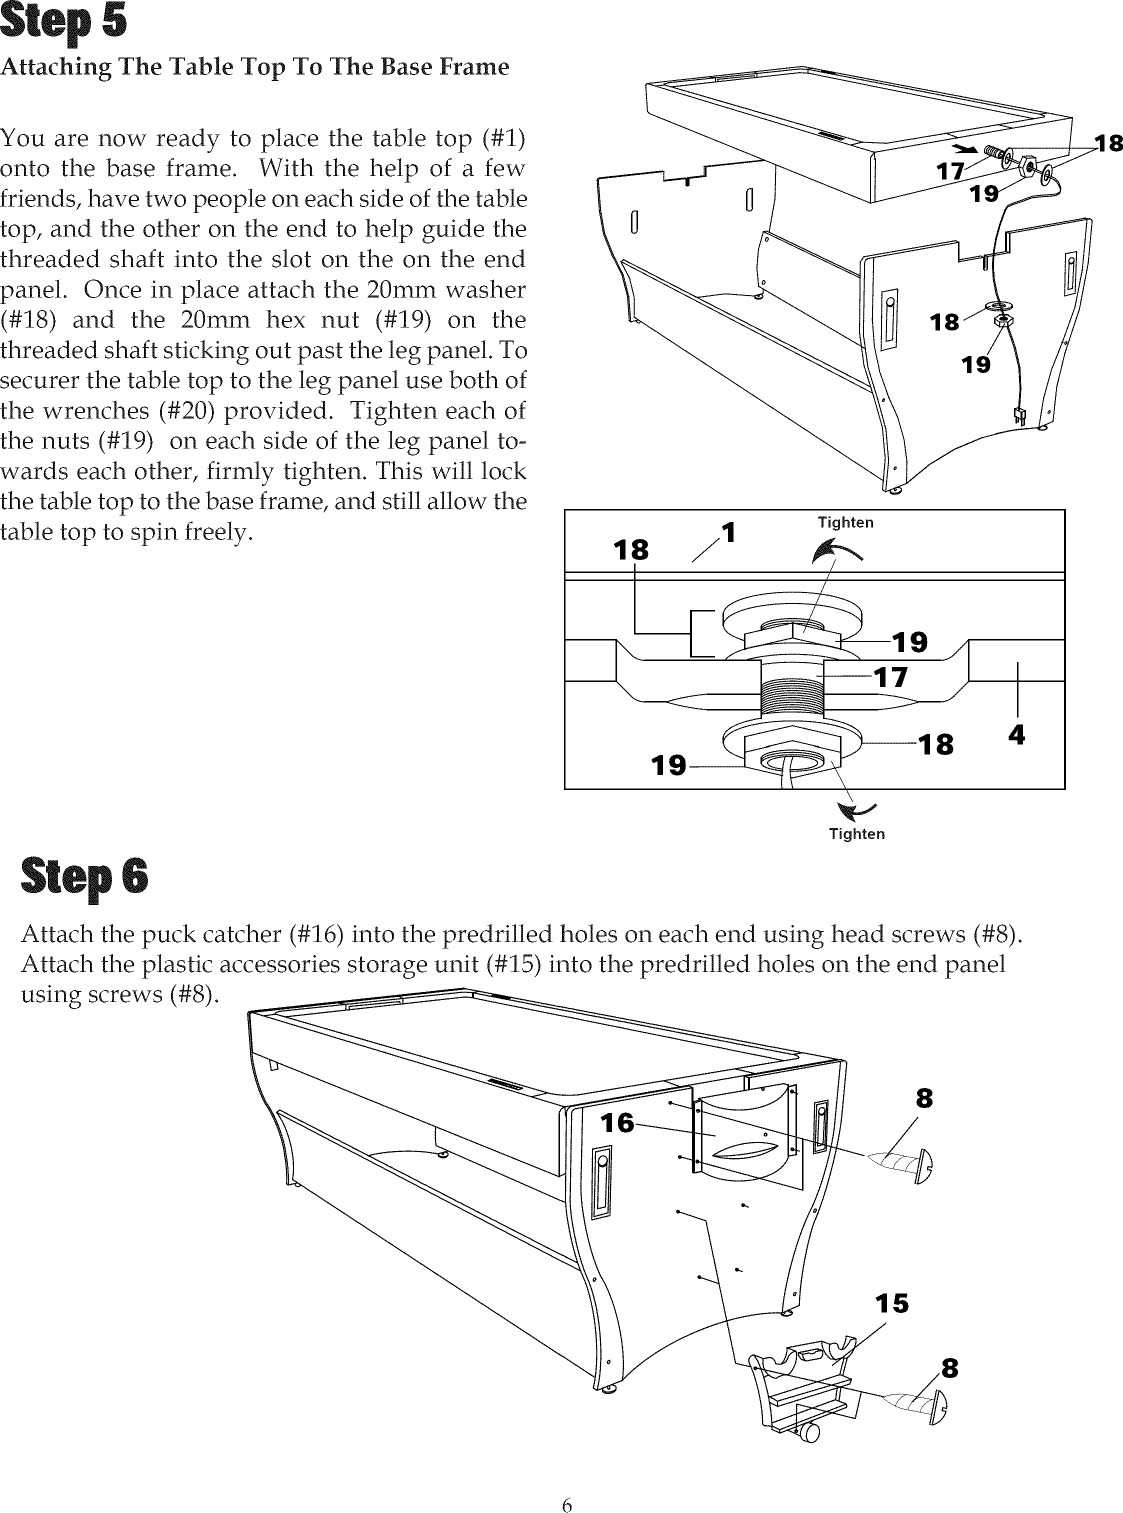 Page 6 of 11 - TRIUMPH  Rebound Table Manual L0912357